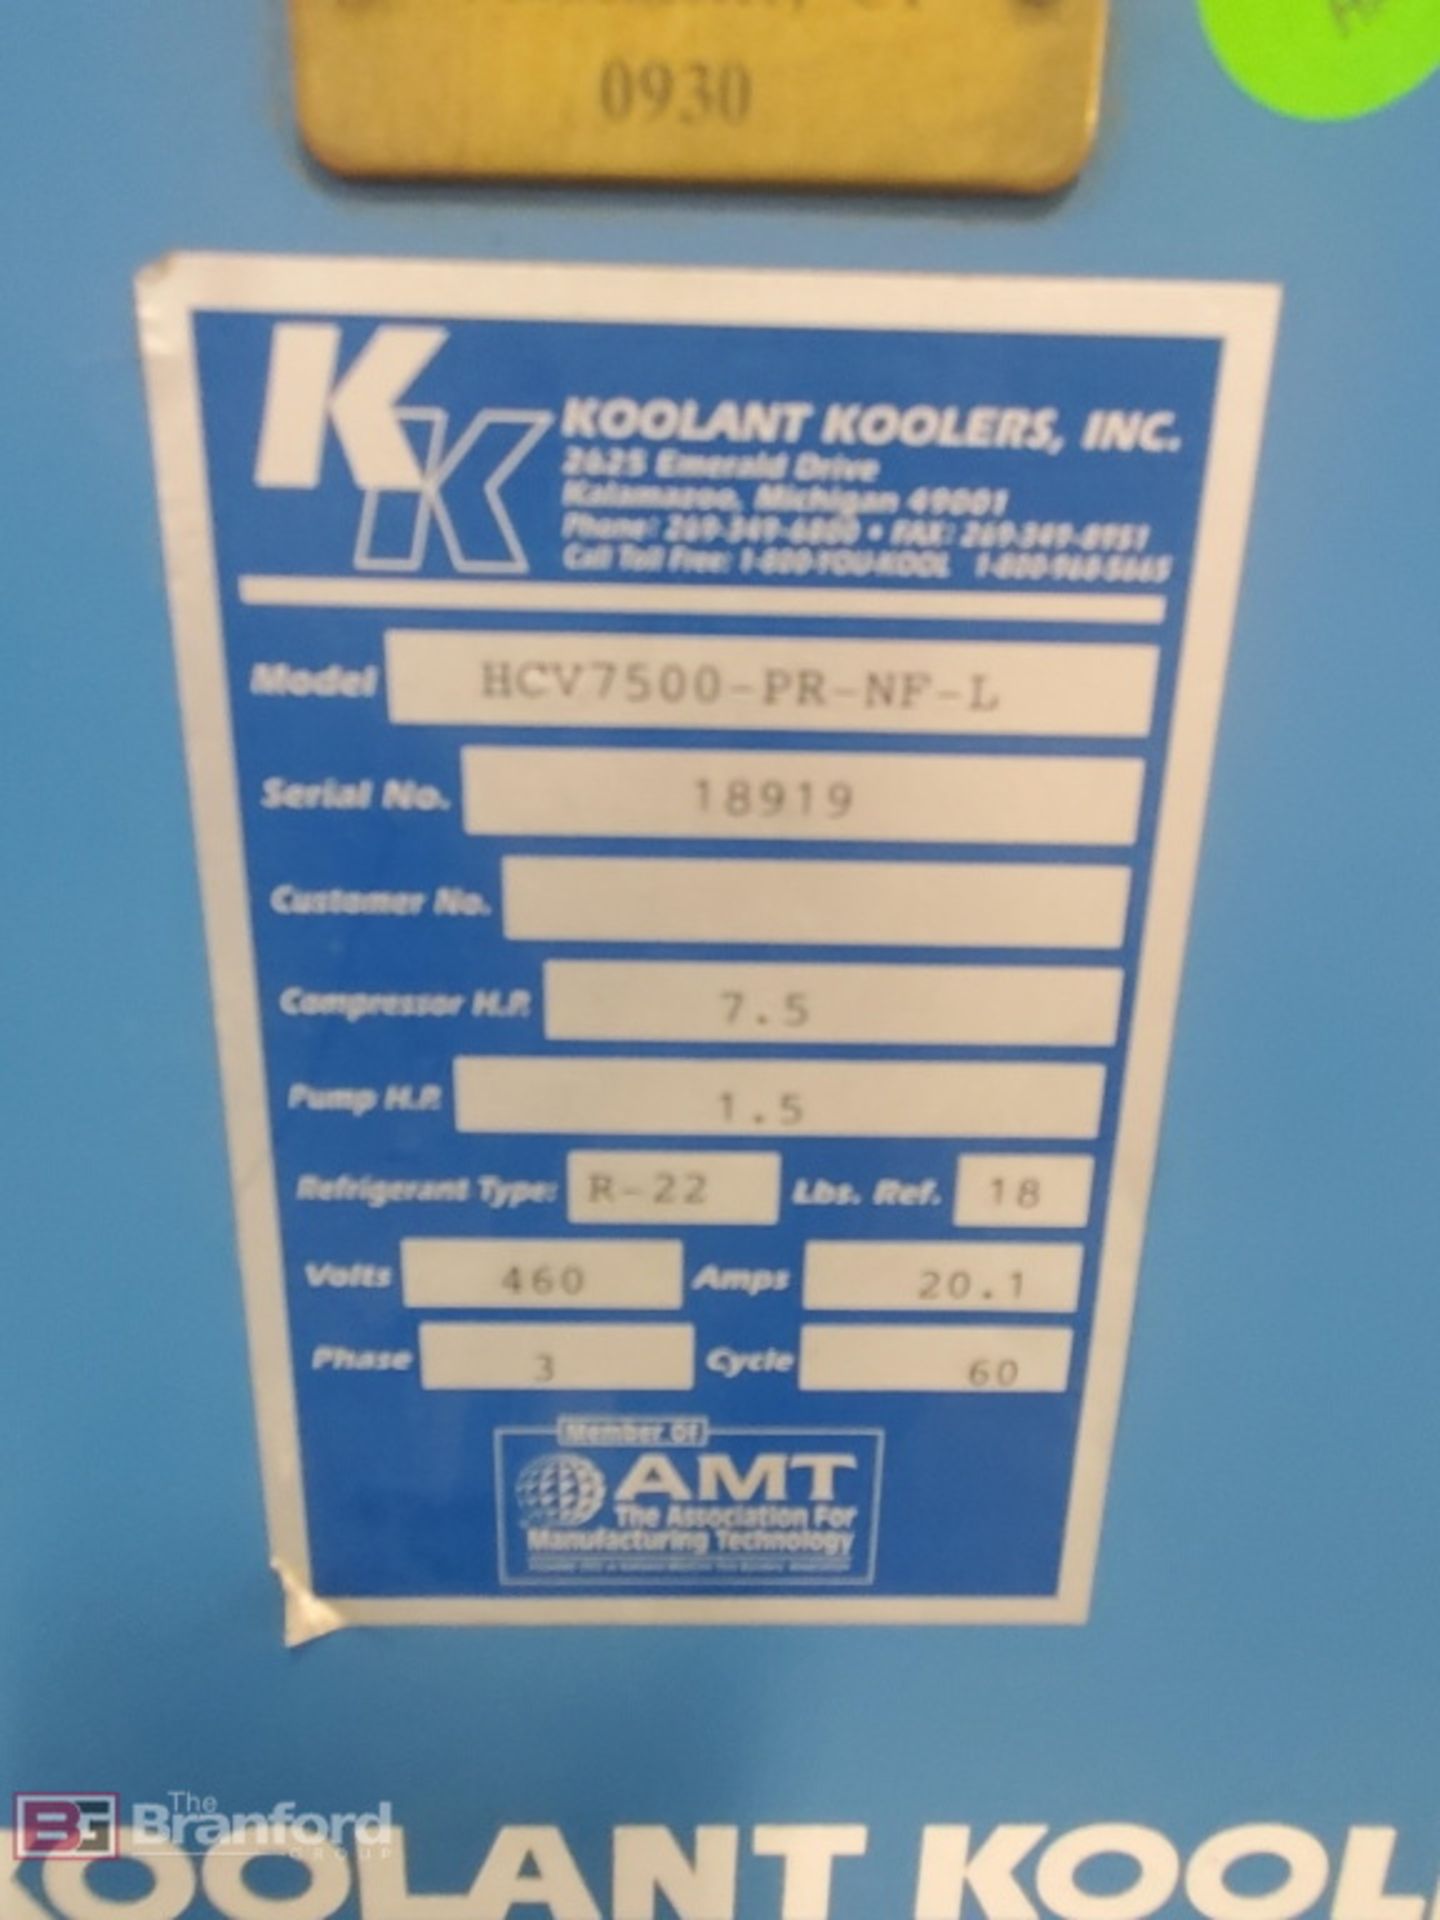 Koolant Koolers Model HCV7500-PR-NF-L Water Temperature Controller - Image 3 of 3